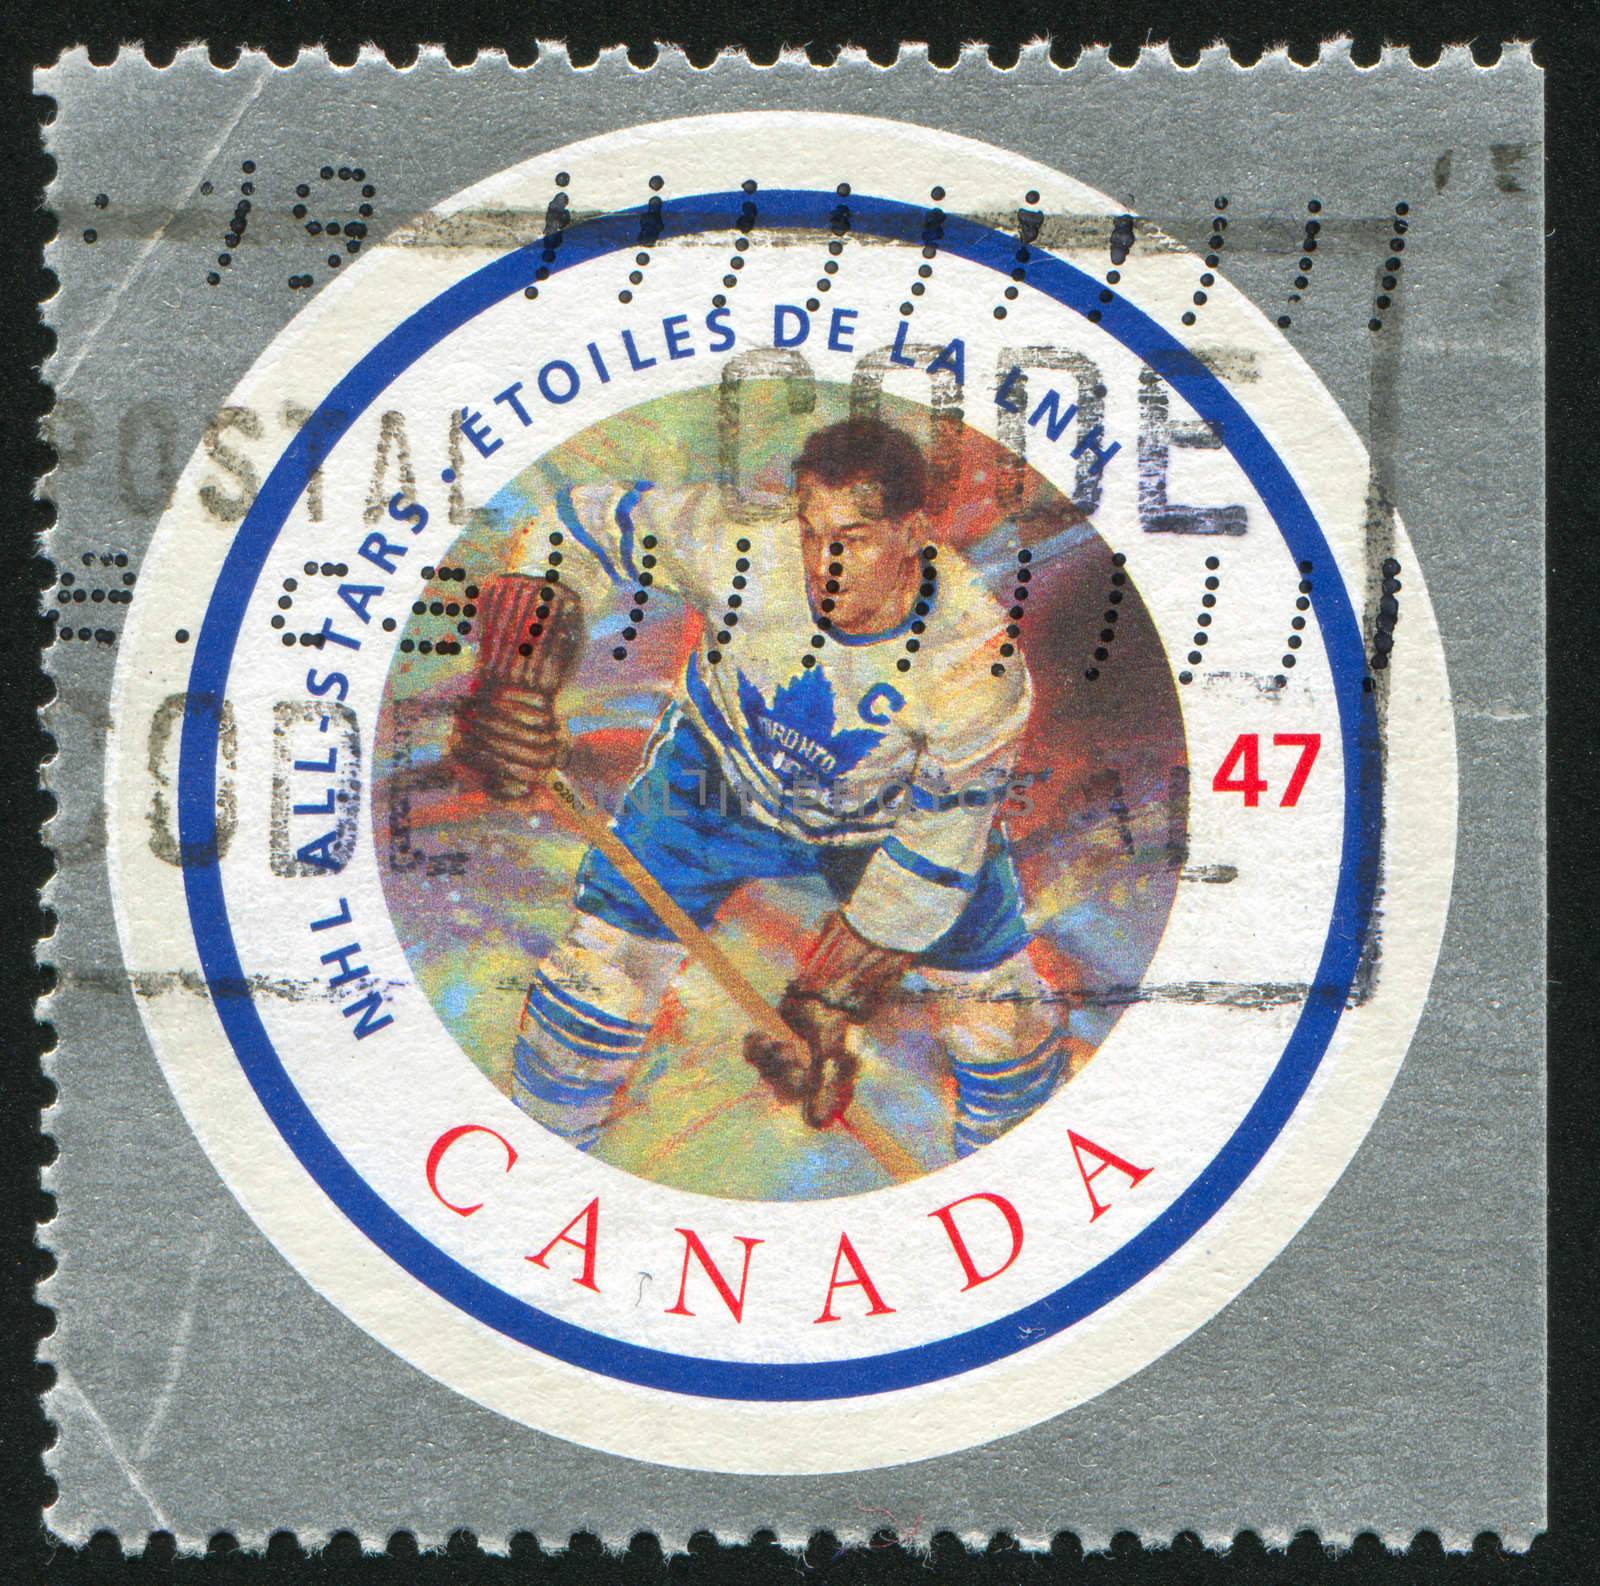 CANADA - CIRCA 2001: stamp printed by Canada, shows hockey player, circa 2001